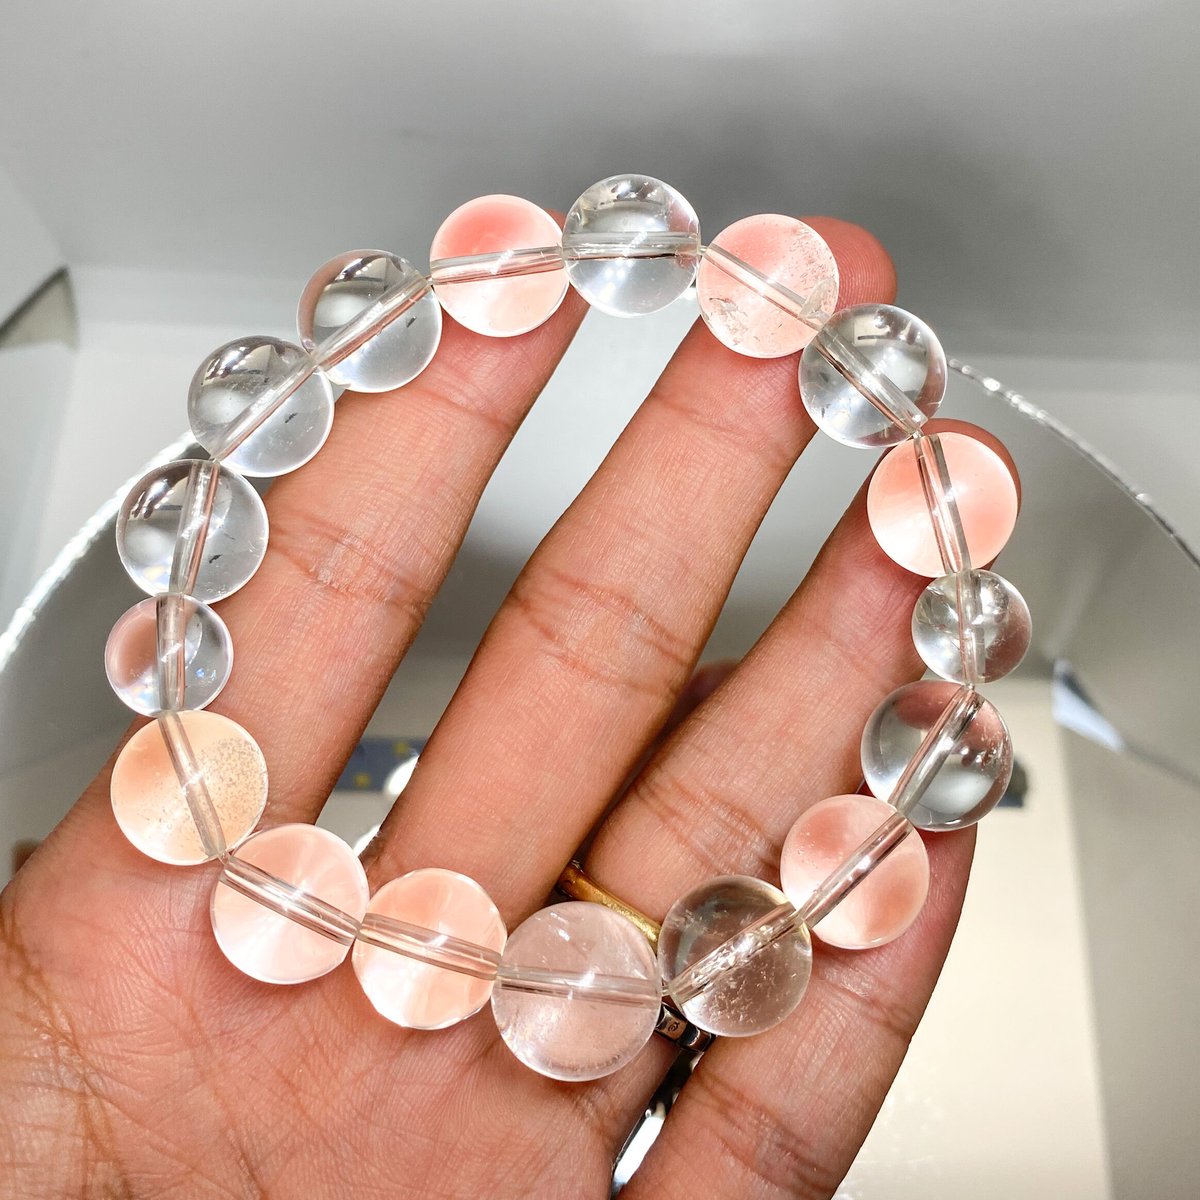 【希少】山梨黒平水晶腕輪数珠約12mm/浄化、潜在能力、気を整える